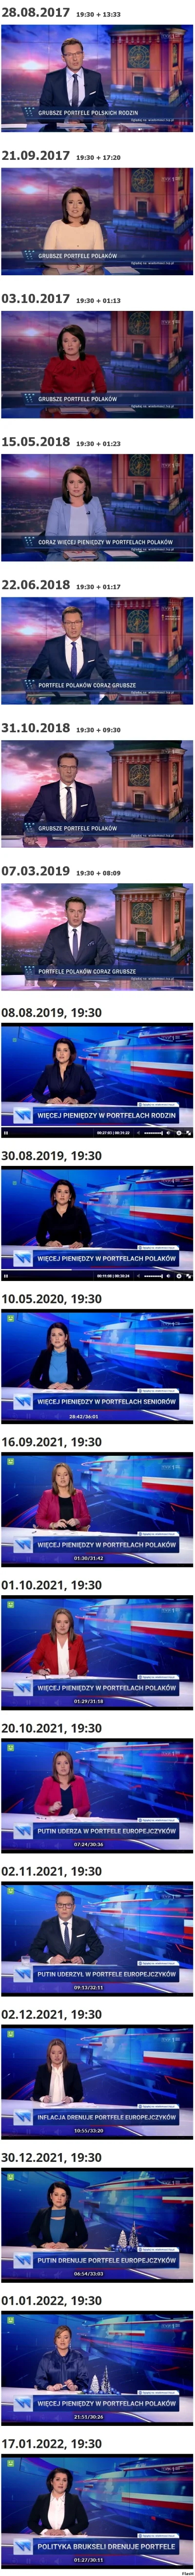 FlasH - Długa historia polskich portfeli na paskach #wiadomosci #tvpis

Kompletny z...